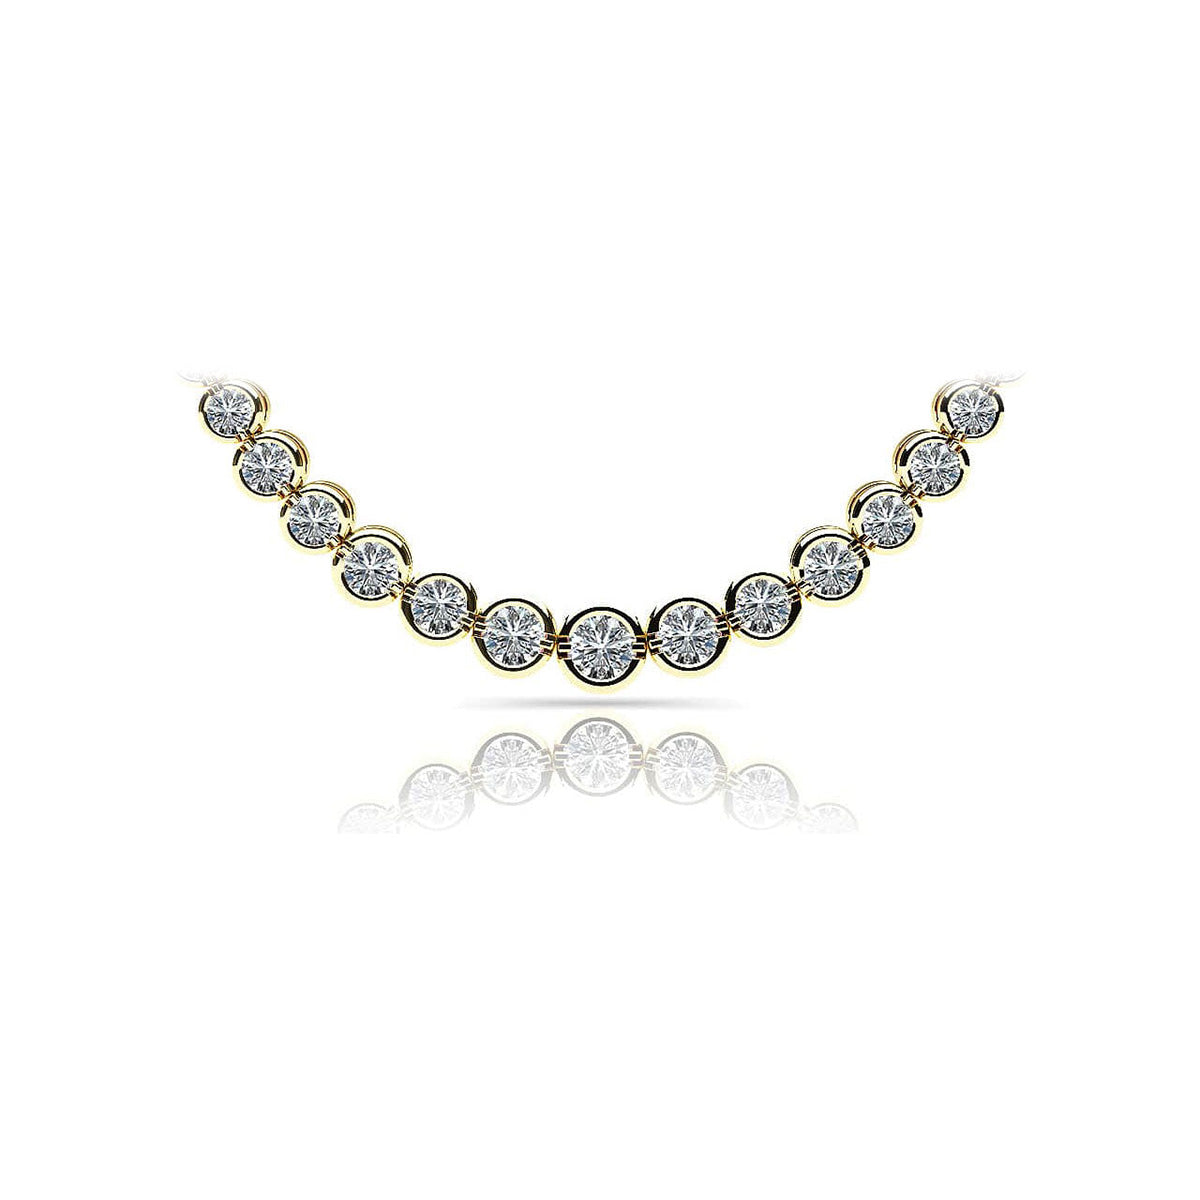 Classic Diamond Strand Necklace With Shiny Links
